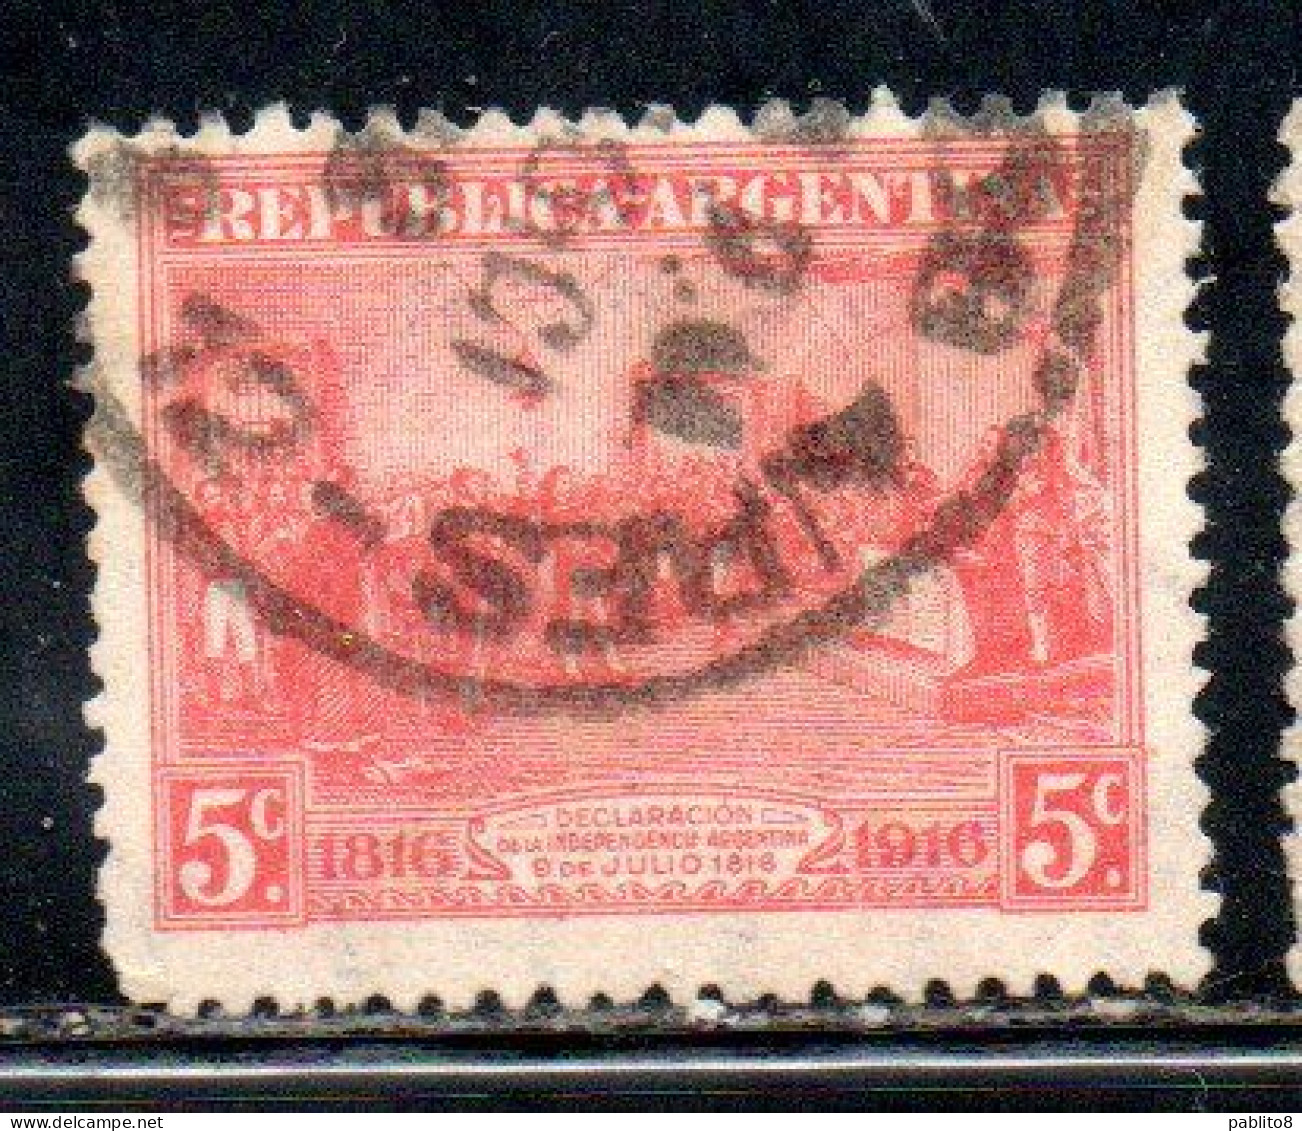 ARGENTINA 1916 DECLARATION OF INDEPENDENCE 5c USED USADO OBLITERE' - Used Stamps